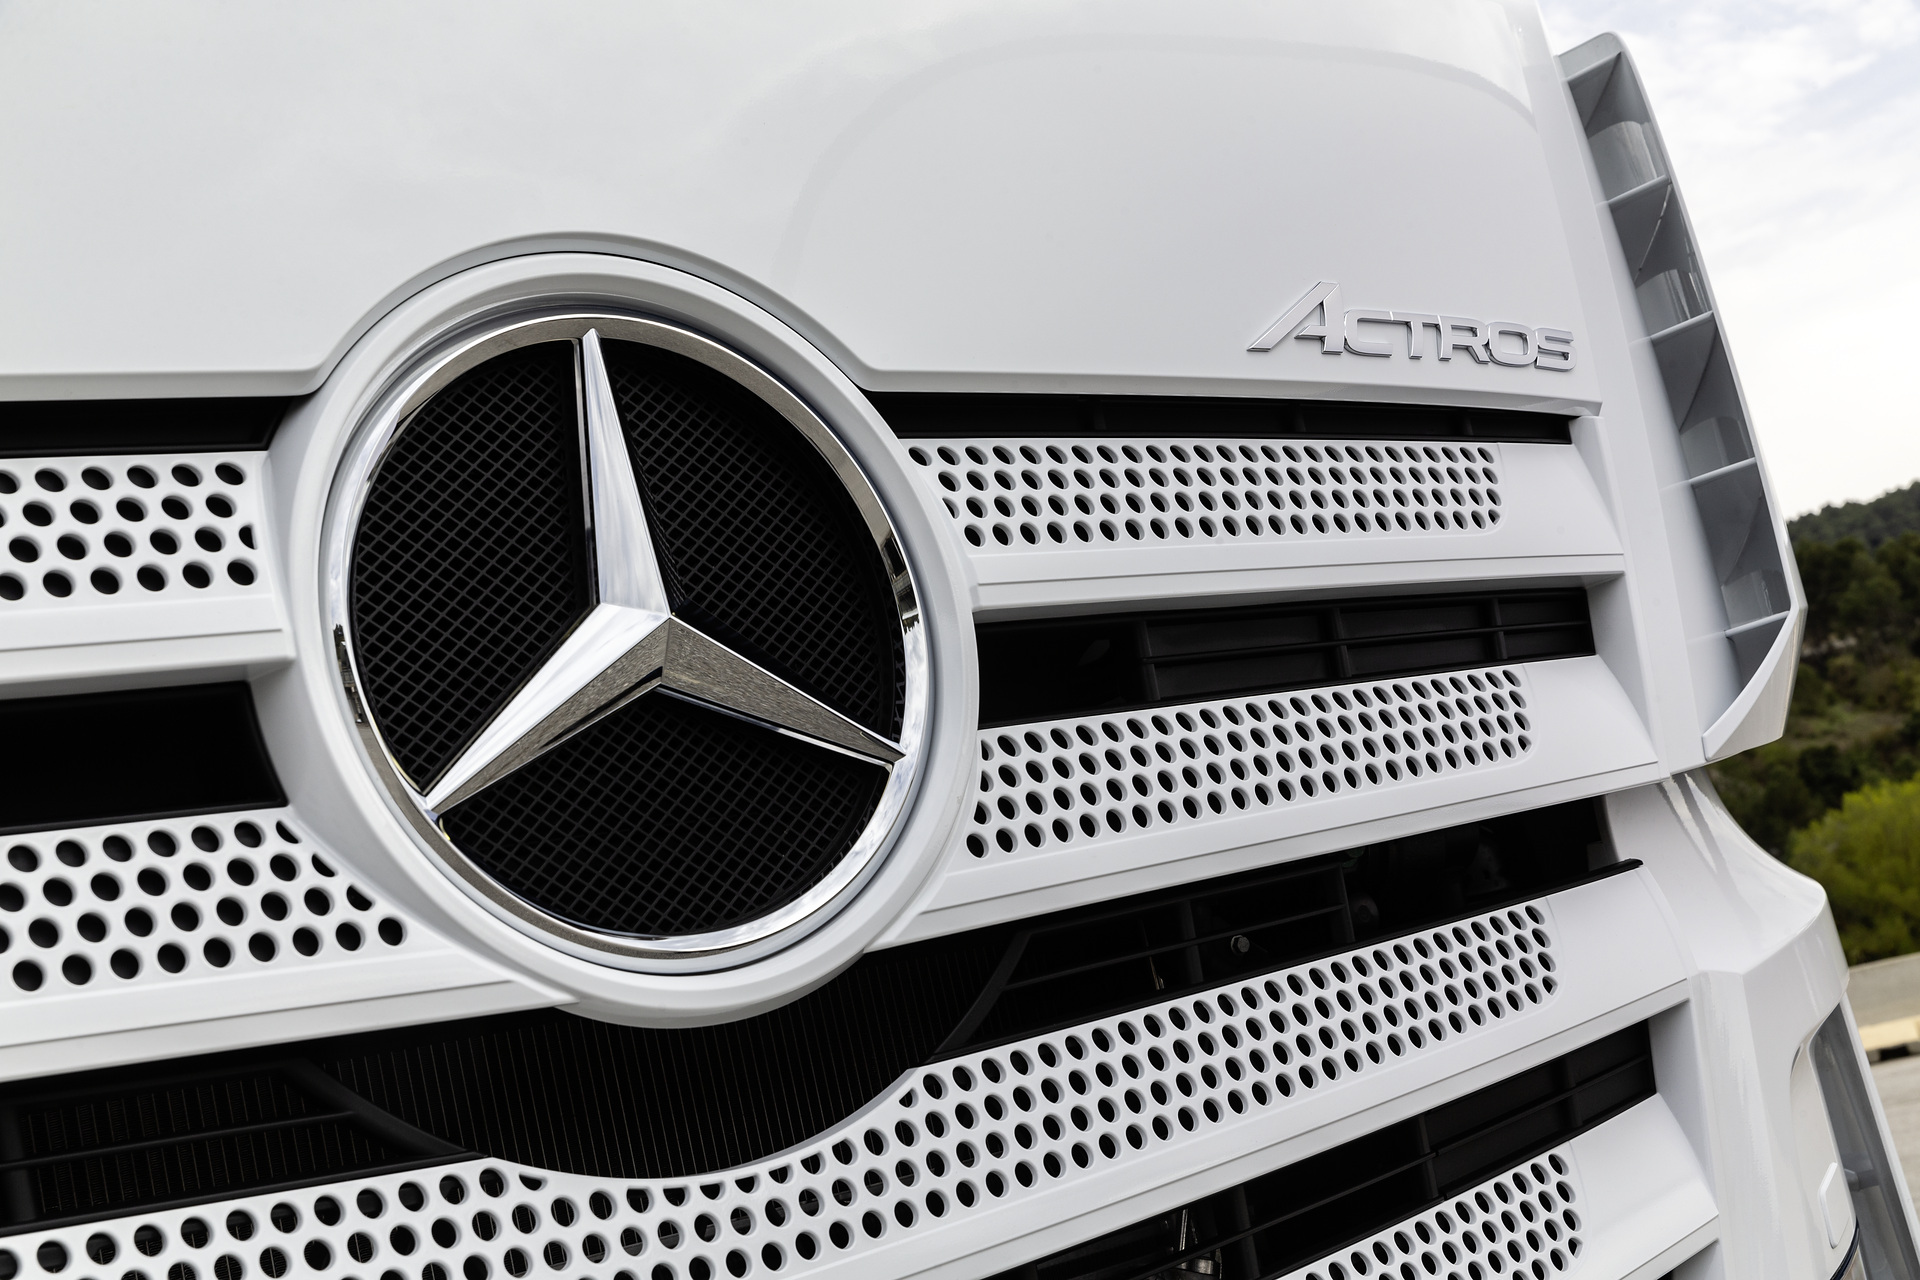 Mercedes-Benz Actros mit Active Brake Assist 5 und Abbiege-Assistent, Active Drive Assist, MirrorCam